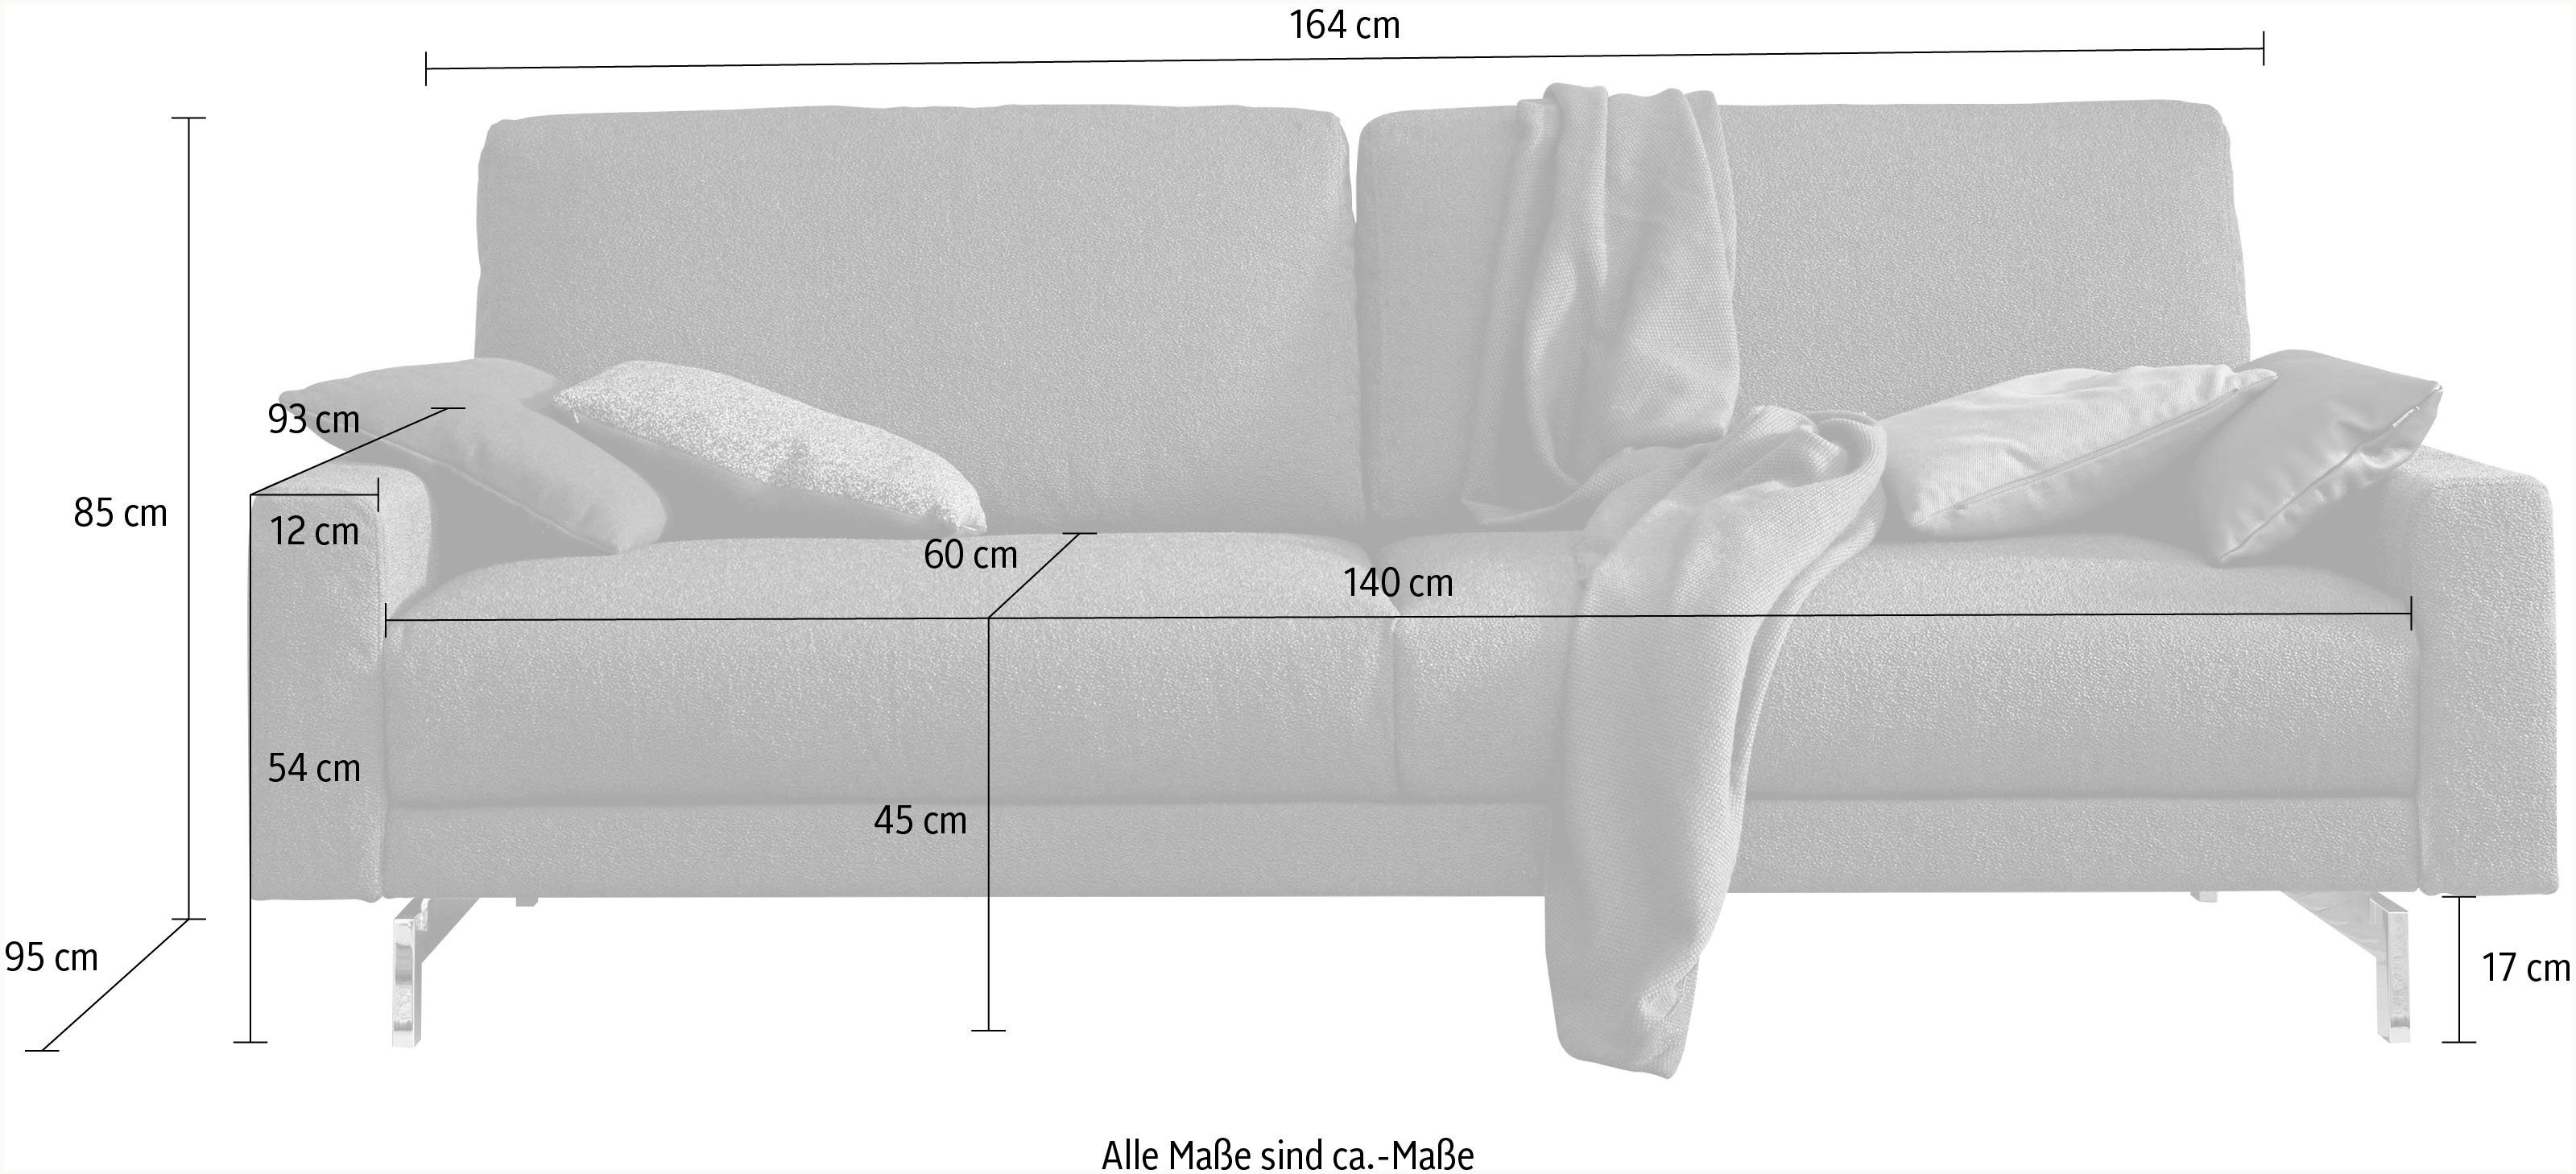 niedrig, Armlehne 164 glänzend, sofa Breite Fuß chromfarben hülsta hs.450, 2-Sitzer cm